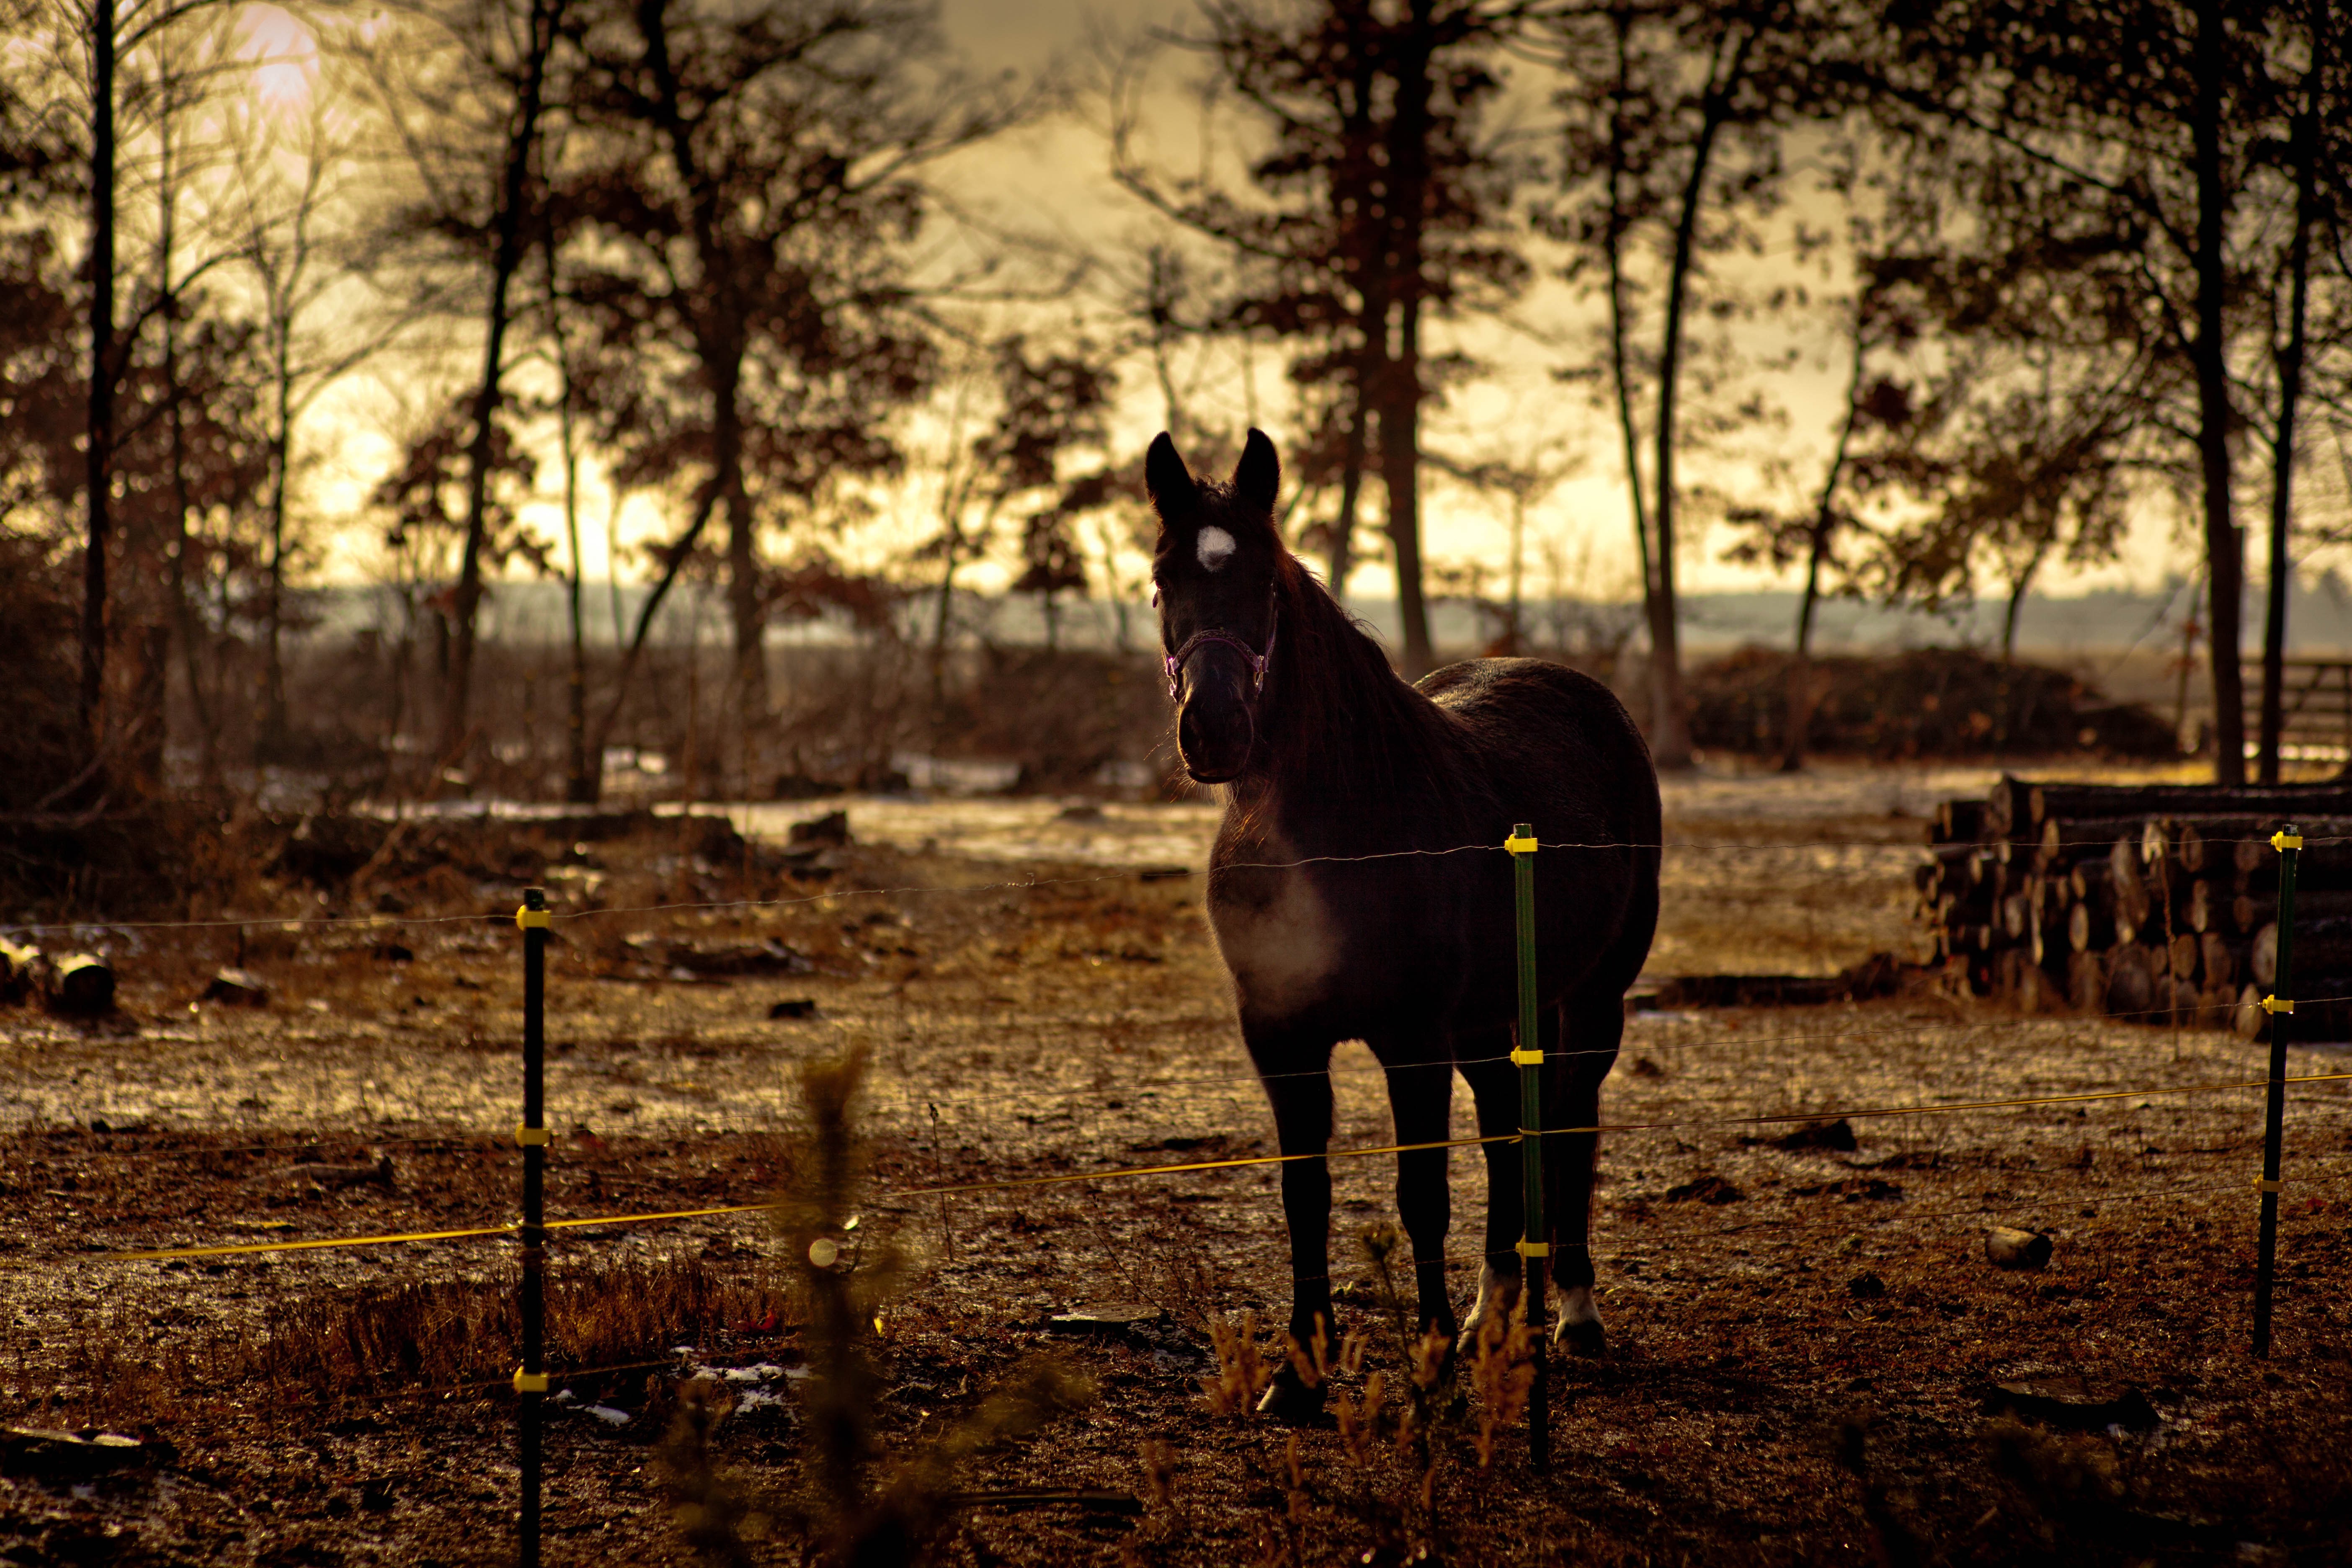 A dark horse walks in the pasture.